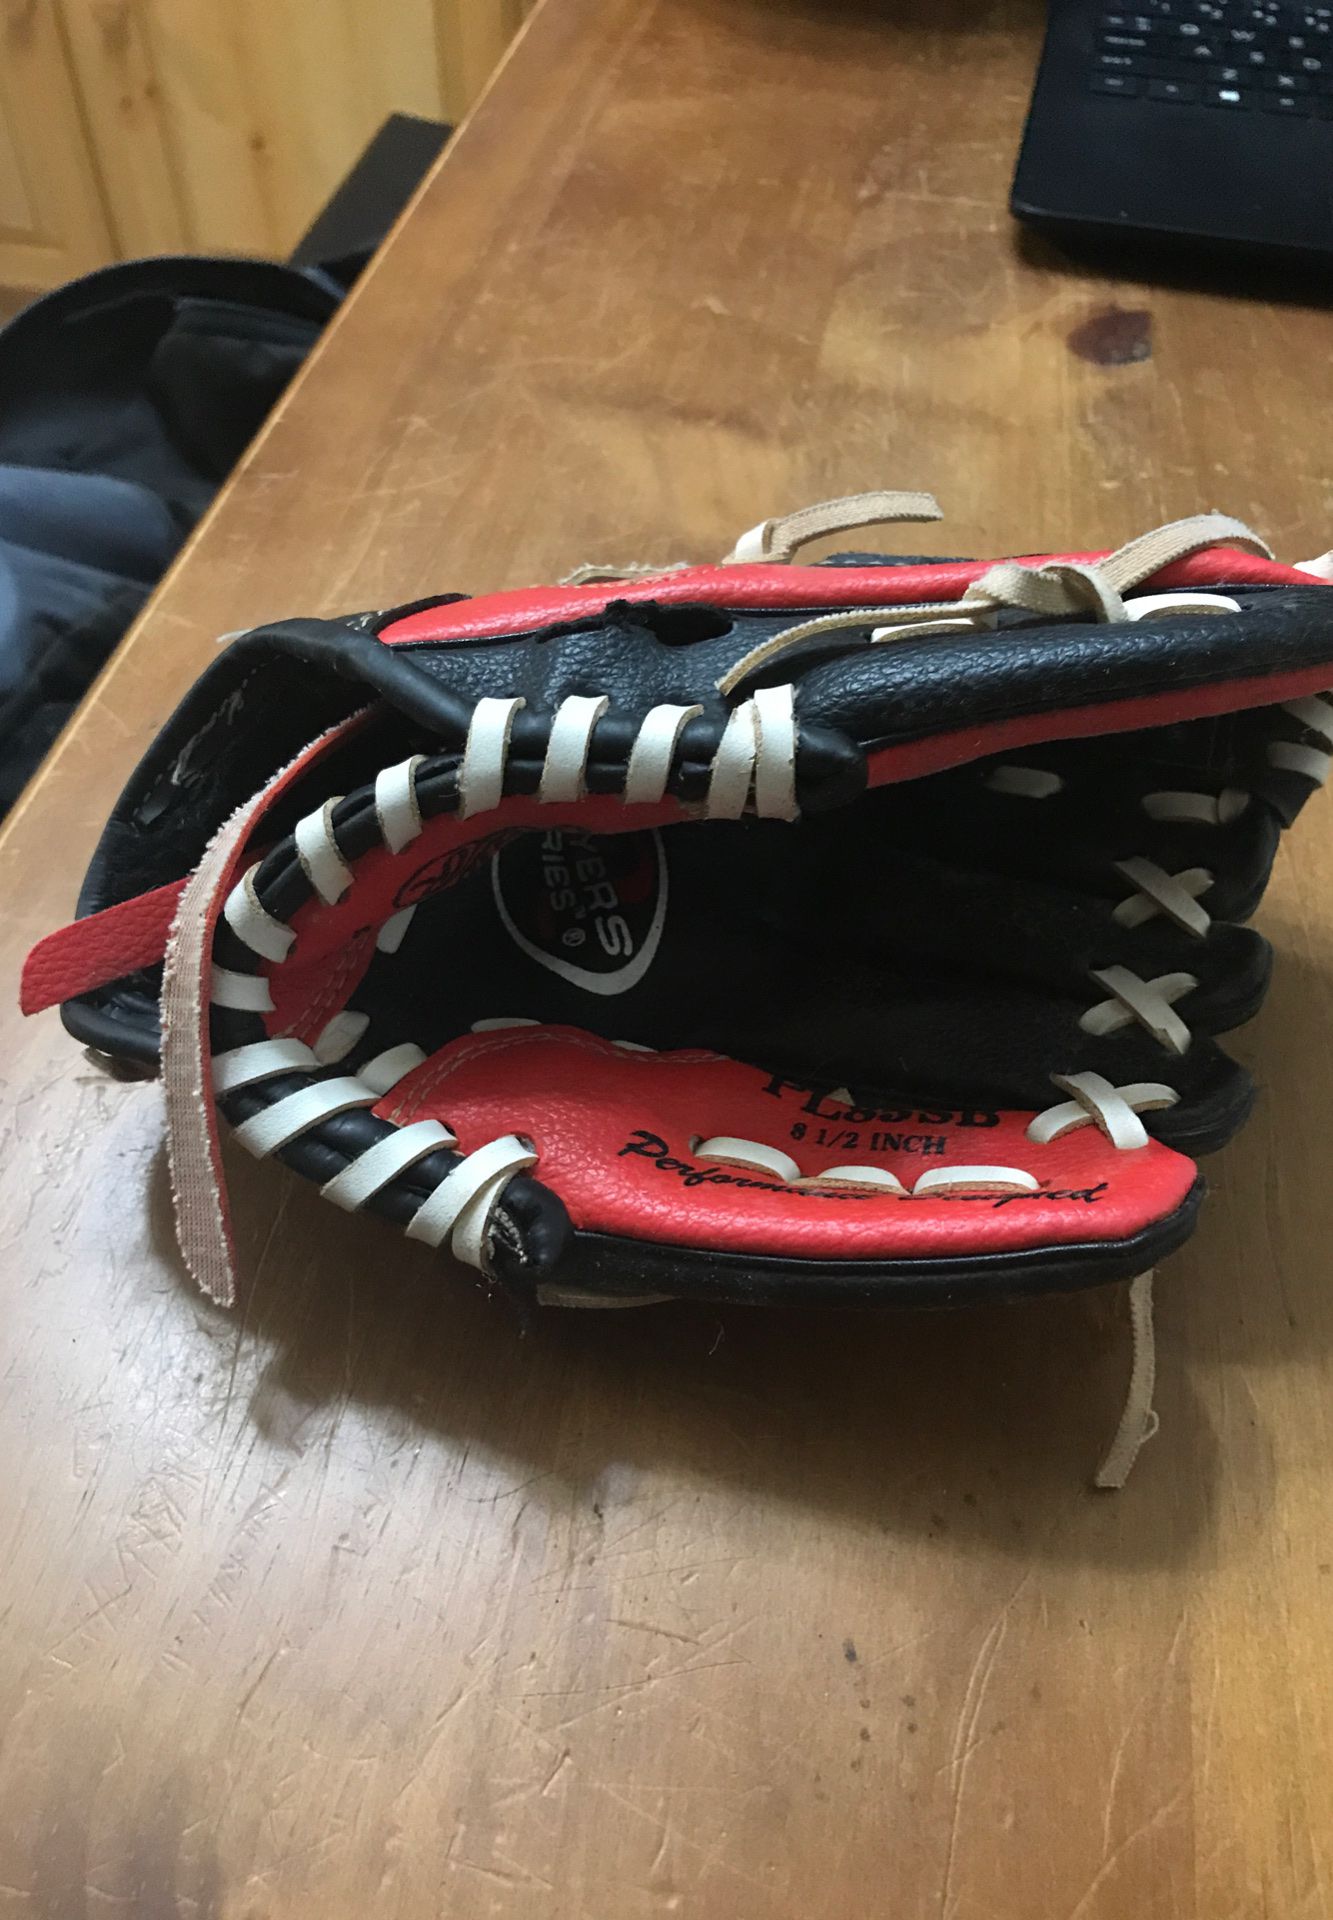 Rawlings baseball glove - 8.5 inch for tee ball